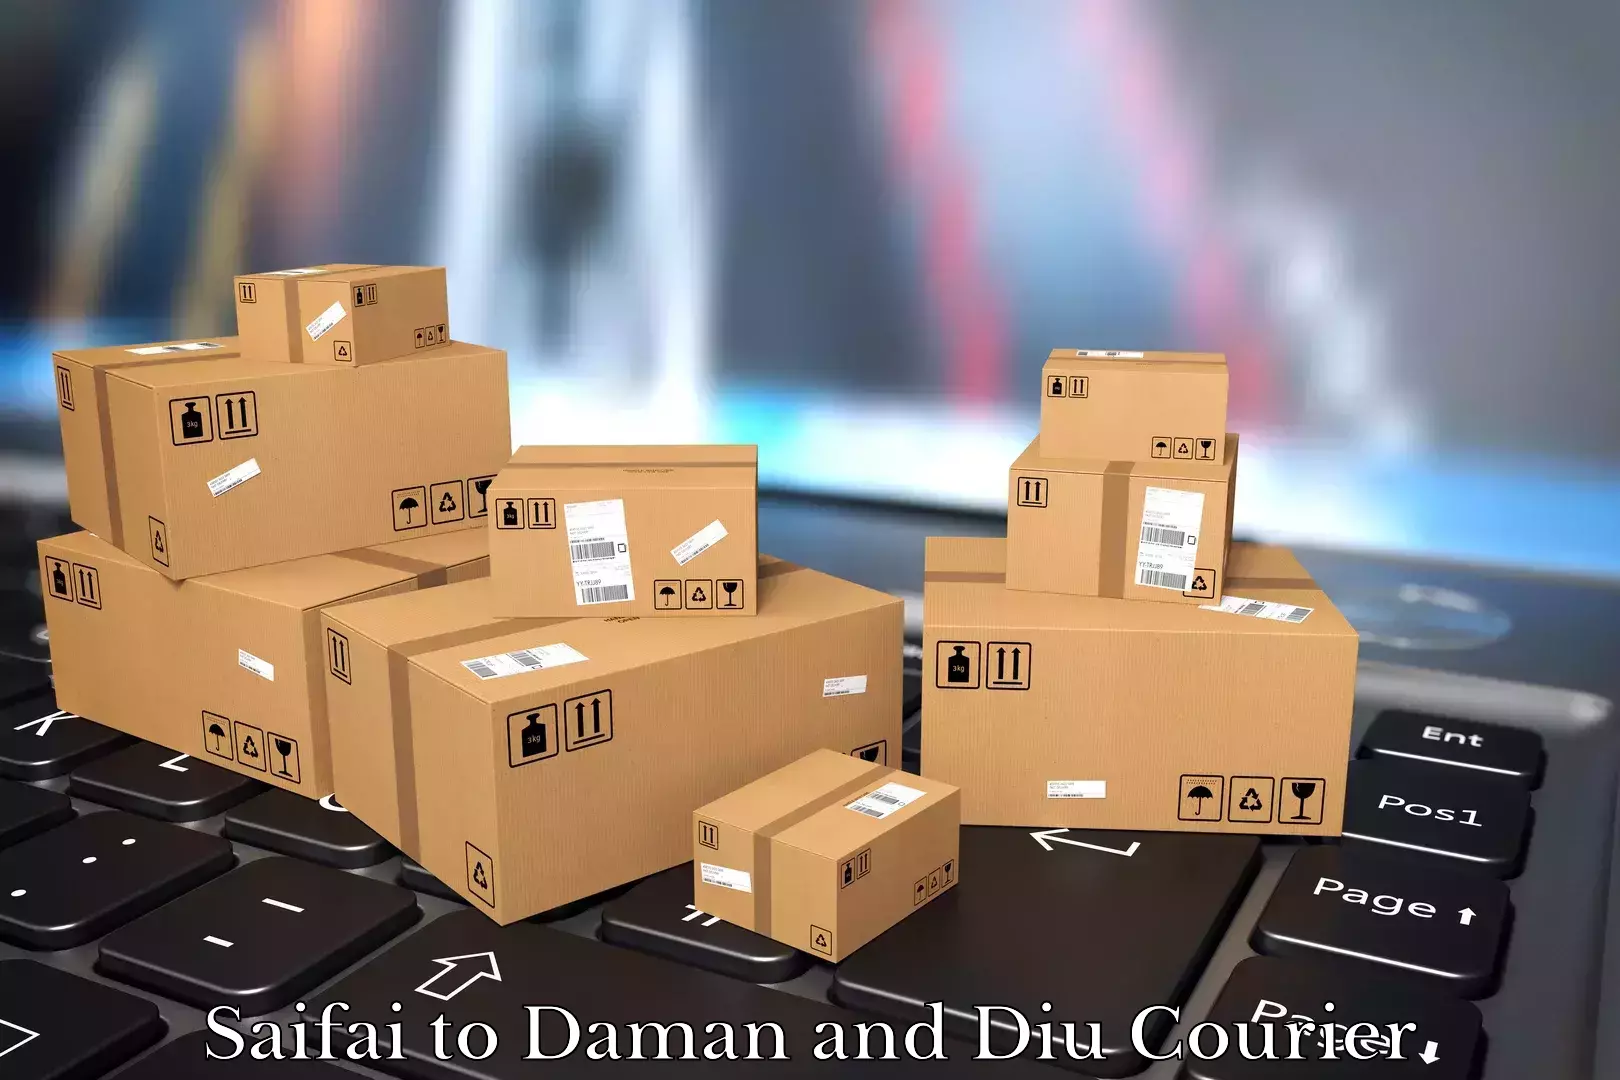 Moving and packing experts Saifai to Daman